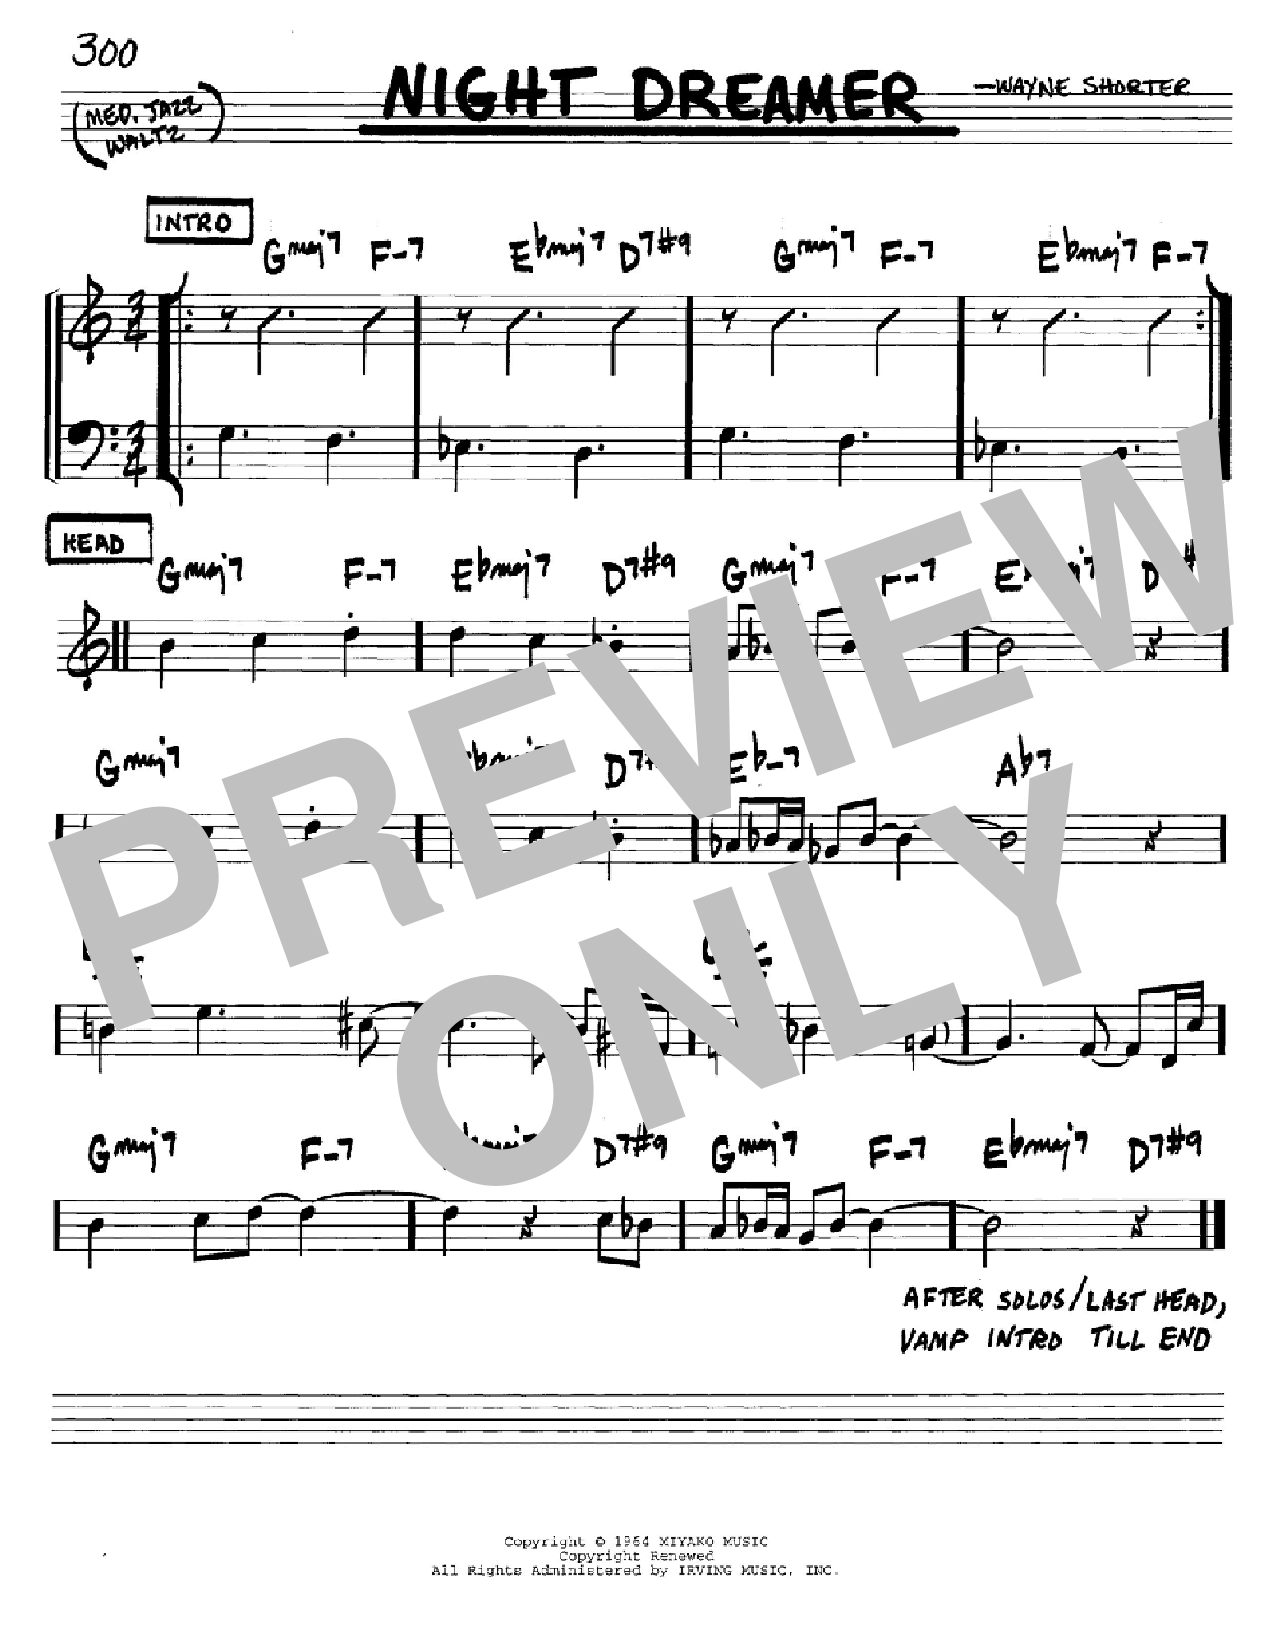 Wayne Shorter Night Dreamer Sheet Music Notes & Chords for Real Book – Melody & Chords - Download or Print PDF